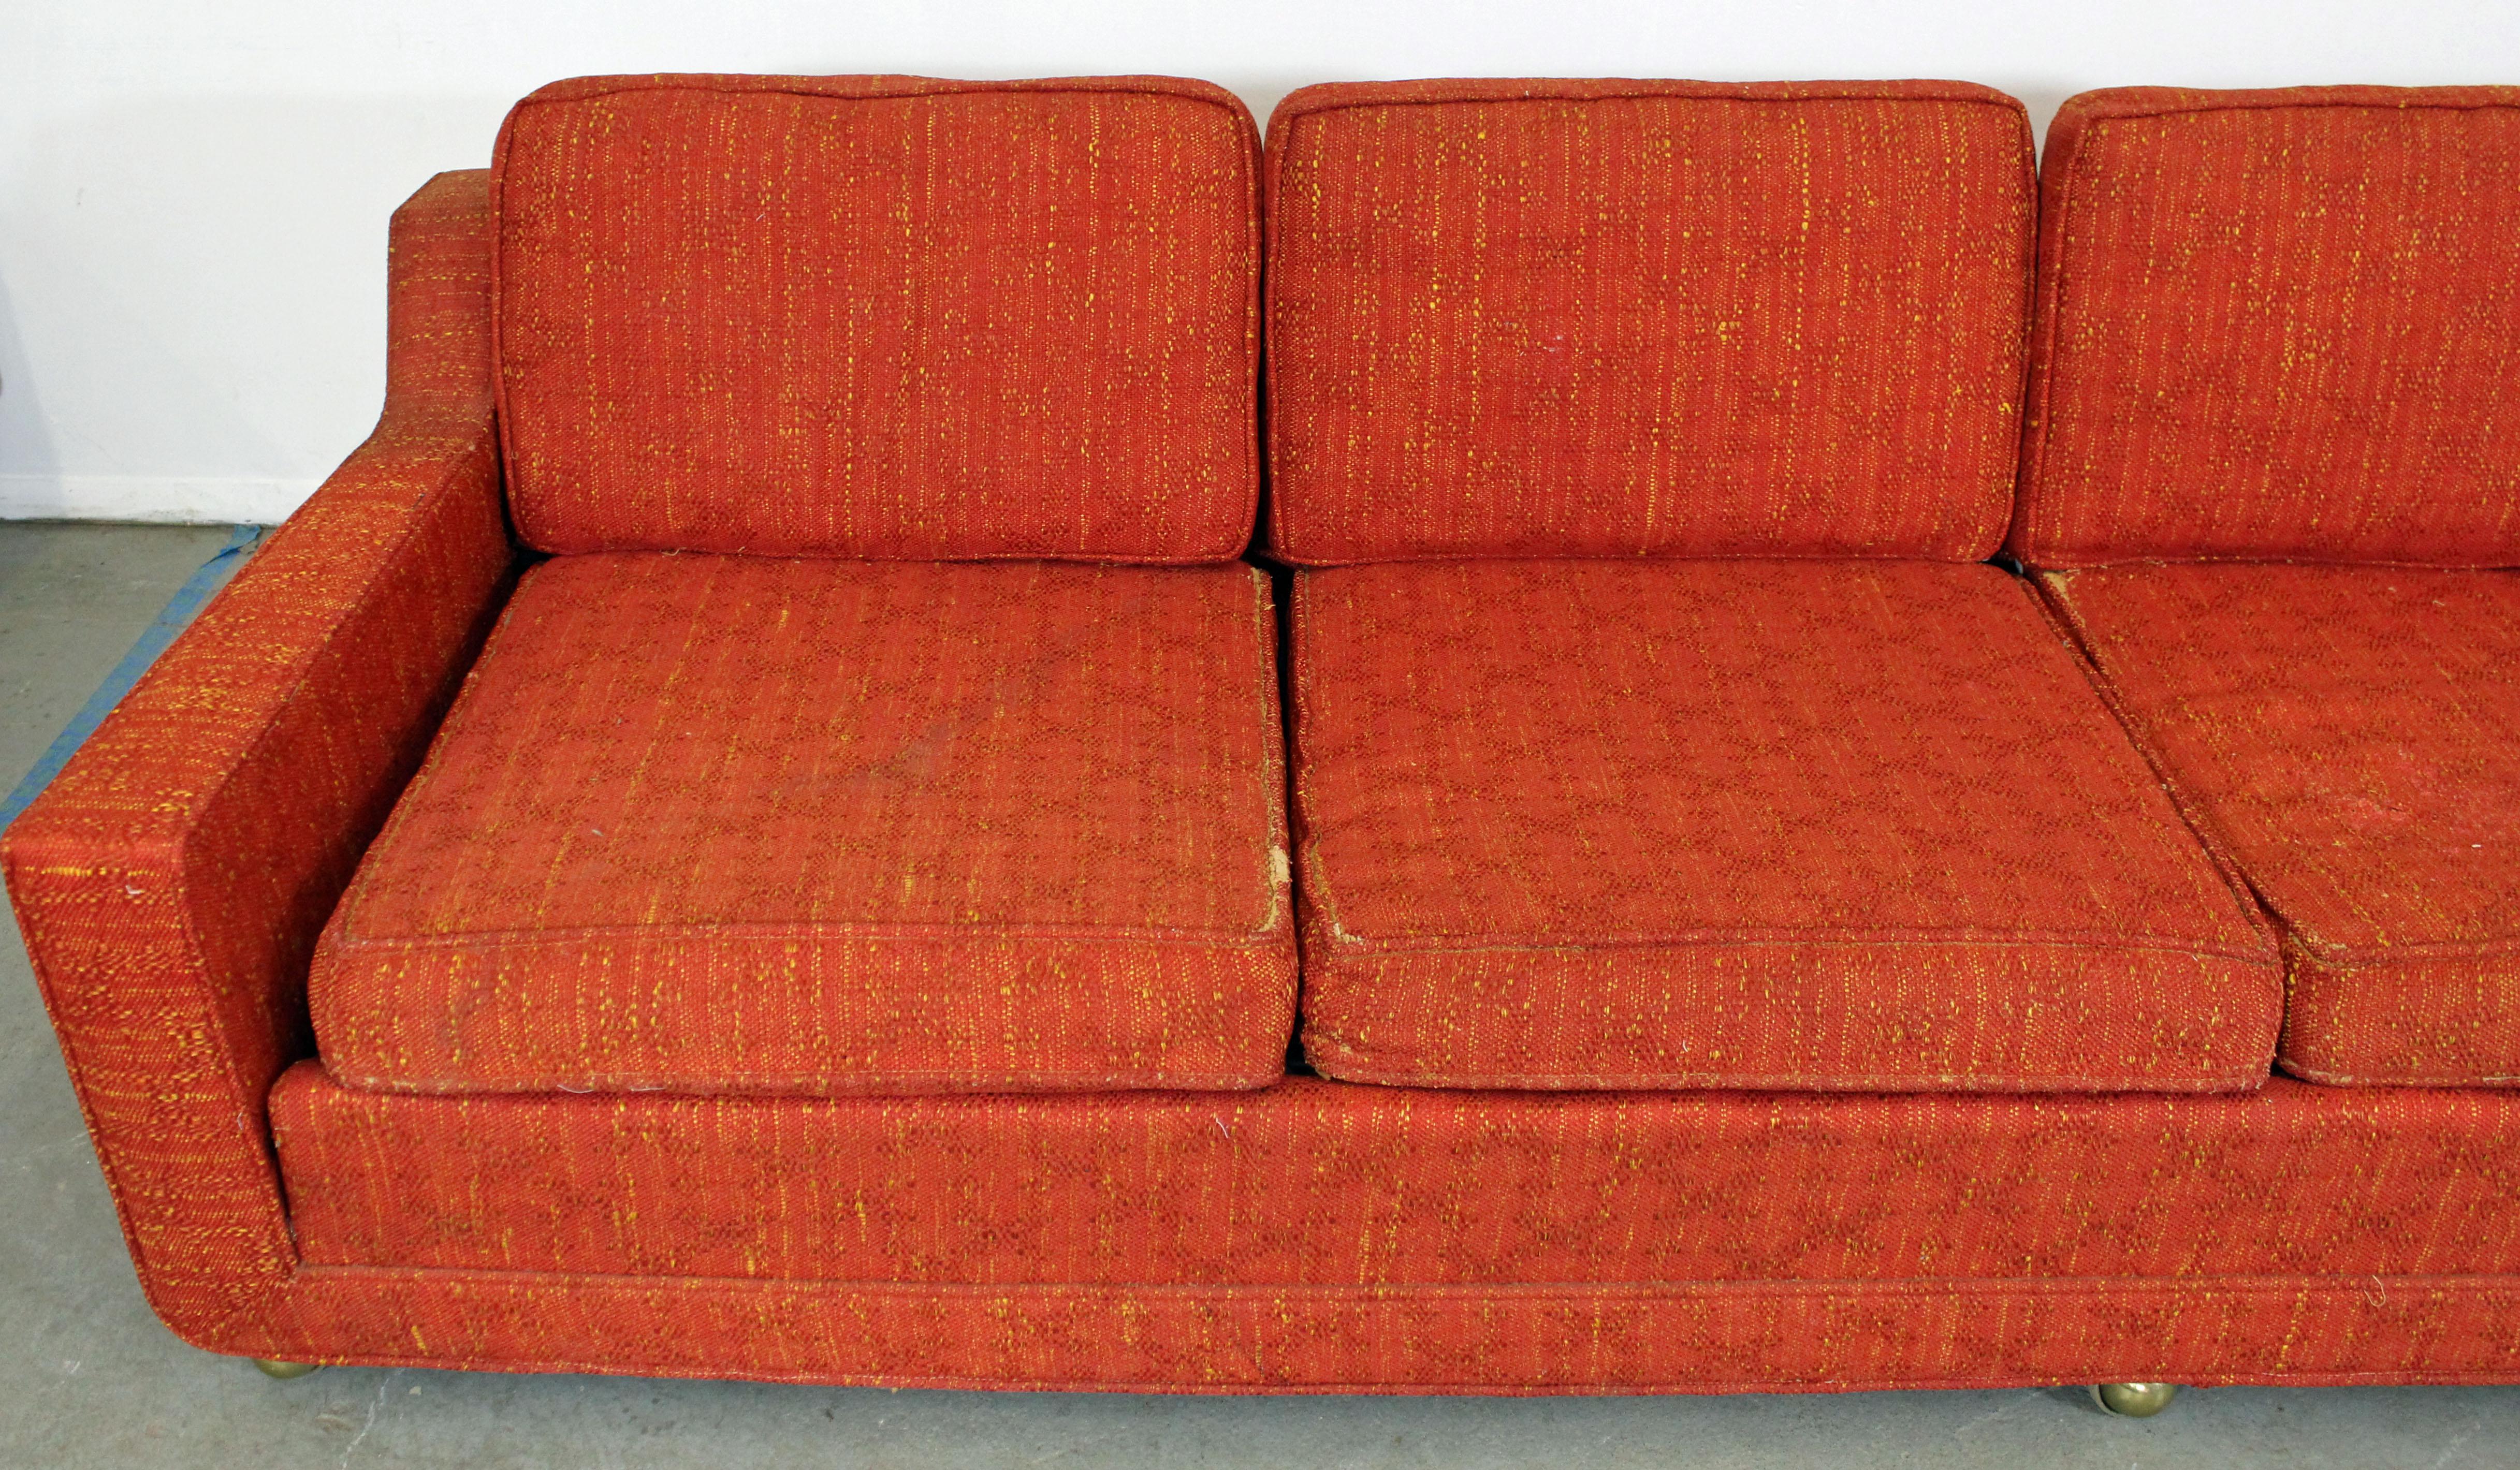 American Mid-Century Modern Elongated Sofa on Wheels by Kroehler